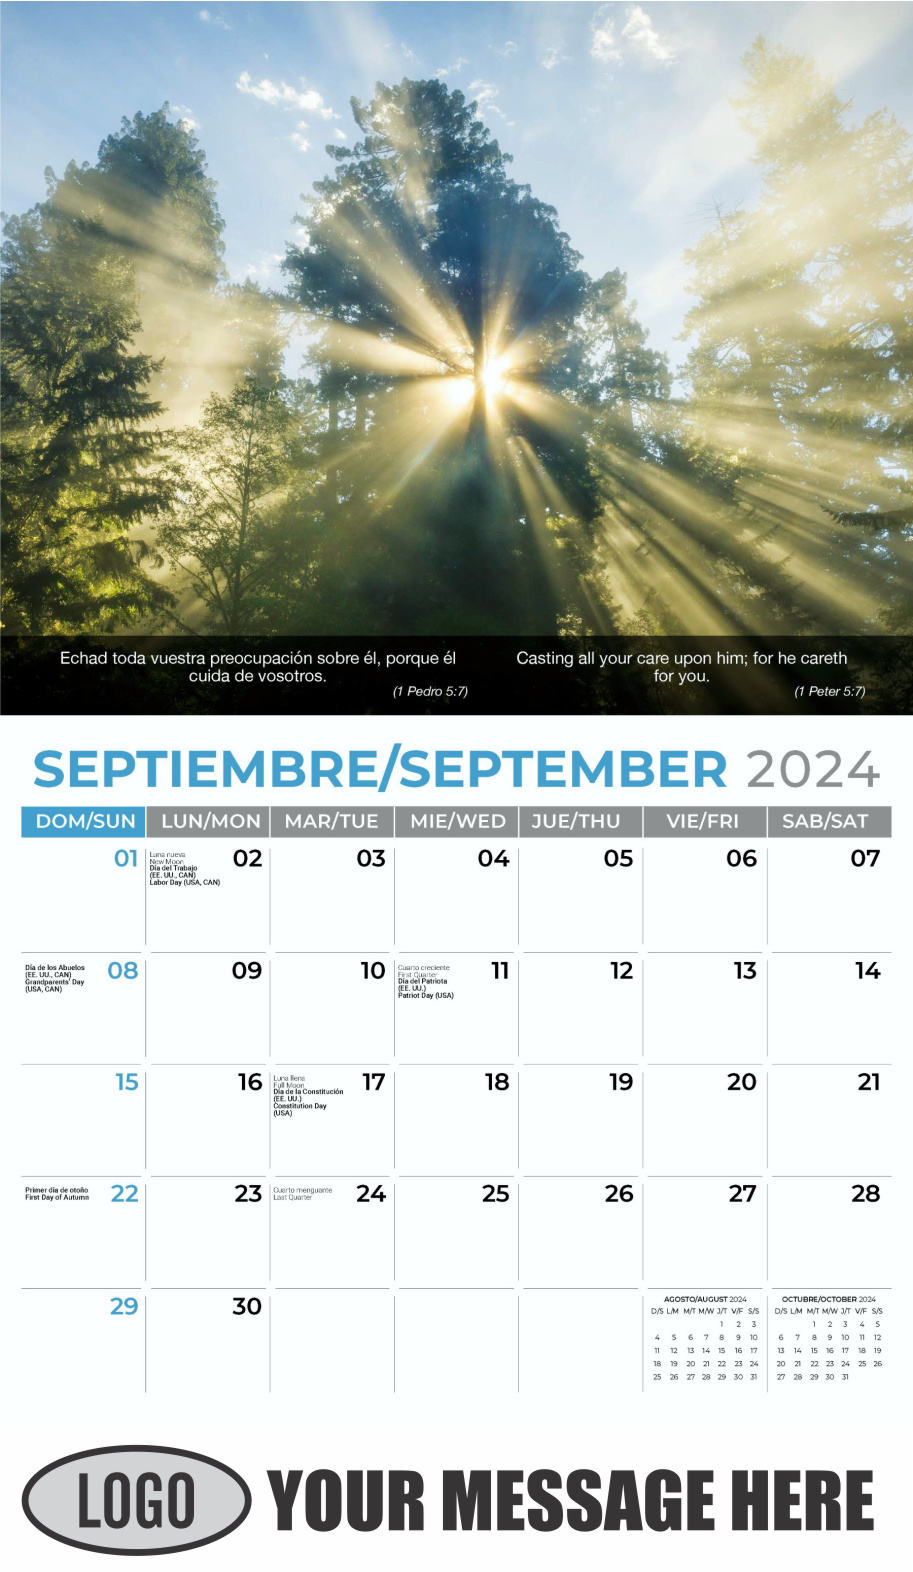 Faith Passages 2024 Bilingual Christian Faith Business Promotional Calendar - September